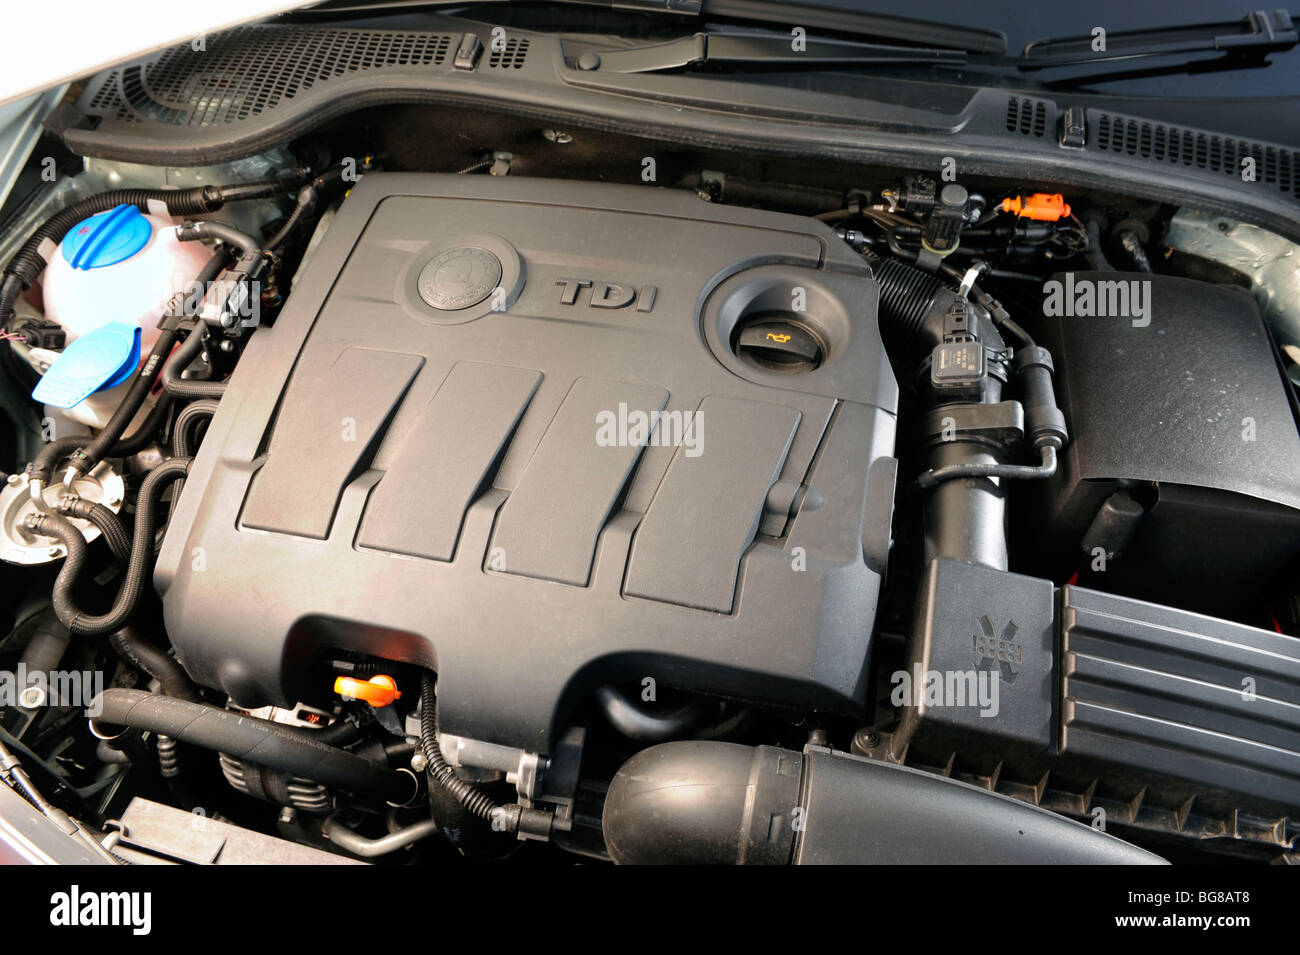 File:VW Touran 1.9 TDI BlueMotion Technology Highline Deep Black.JPG -  Wikimedia Commons